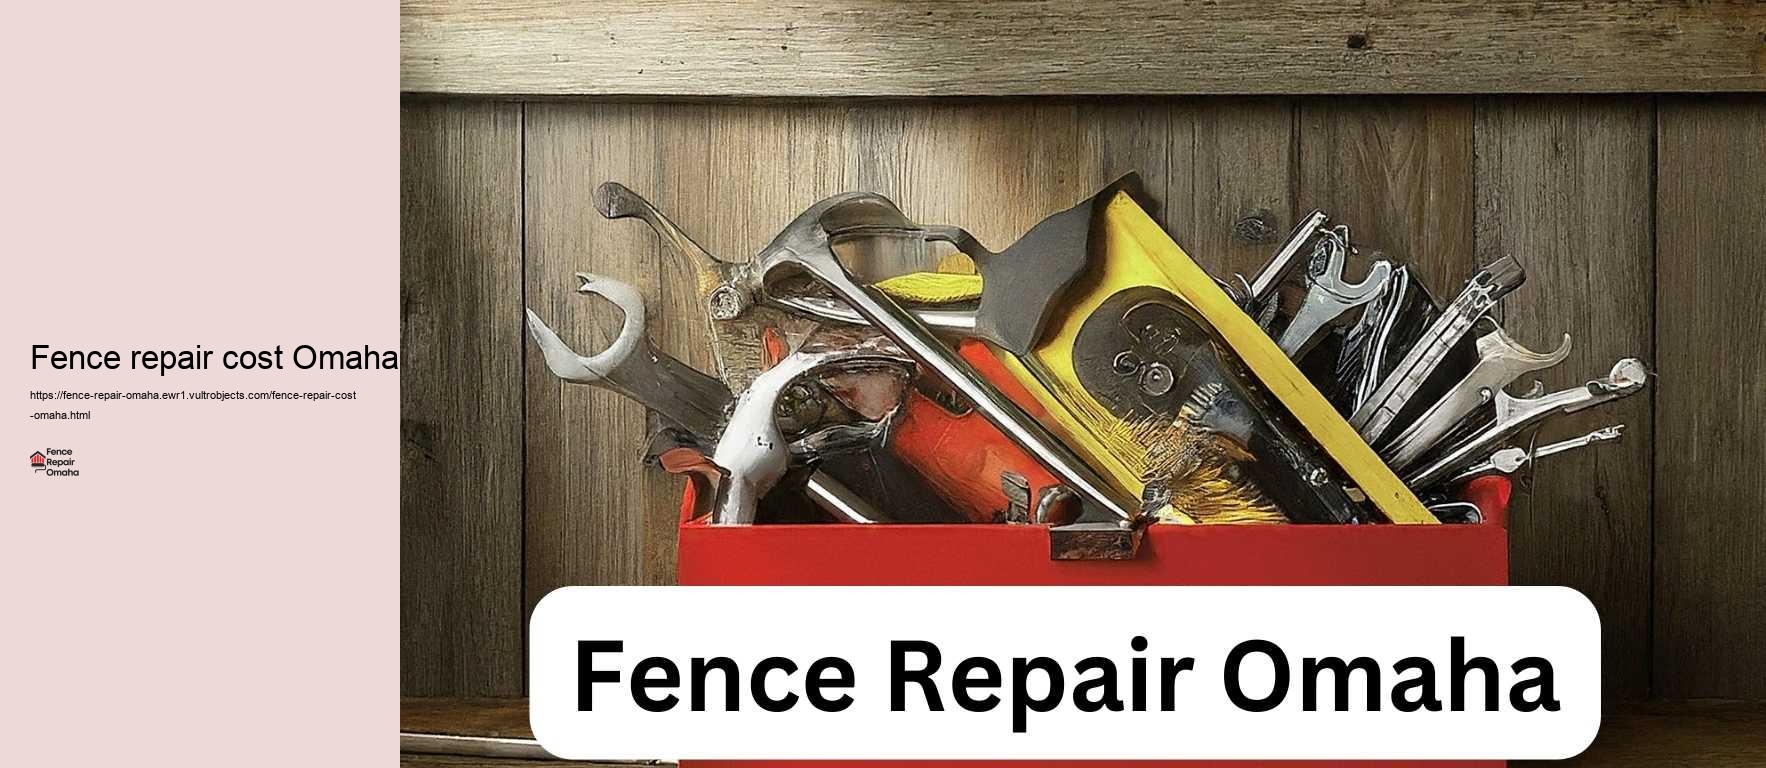 Fence repair cost Omaha